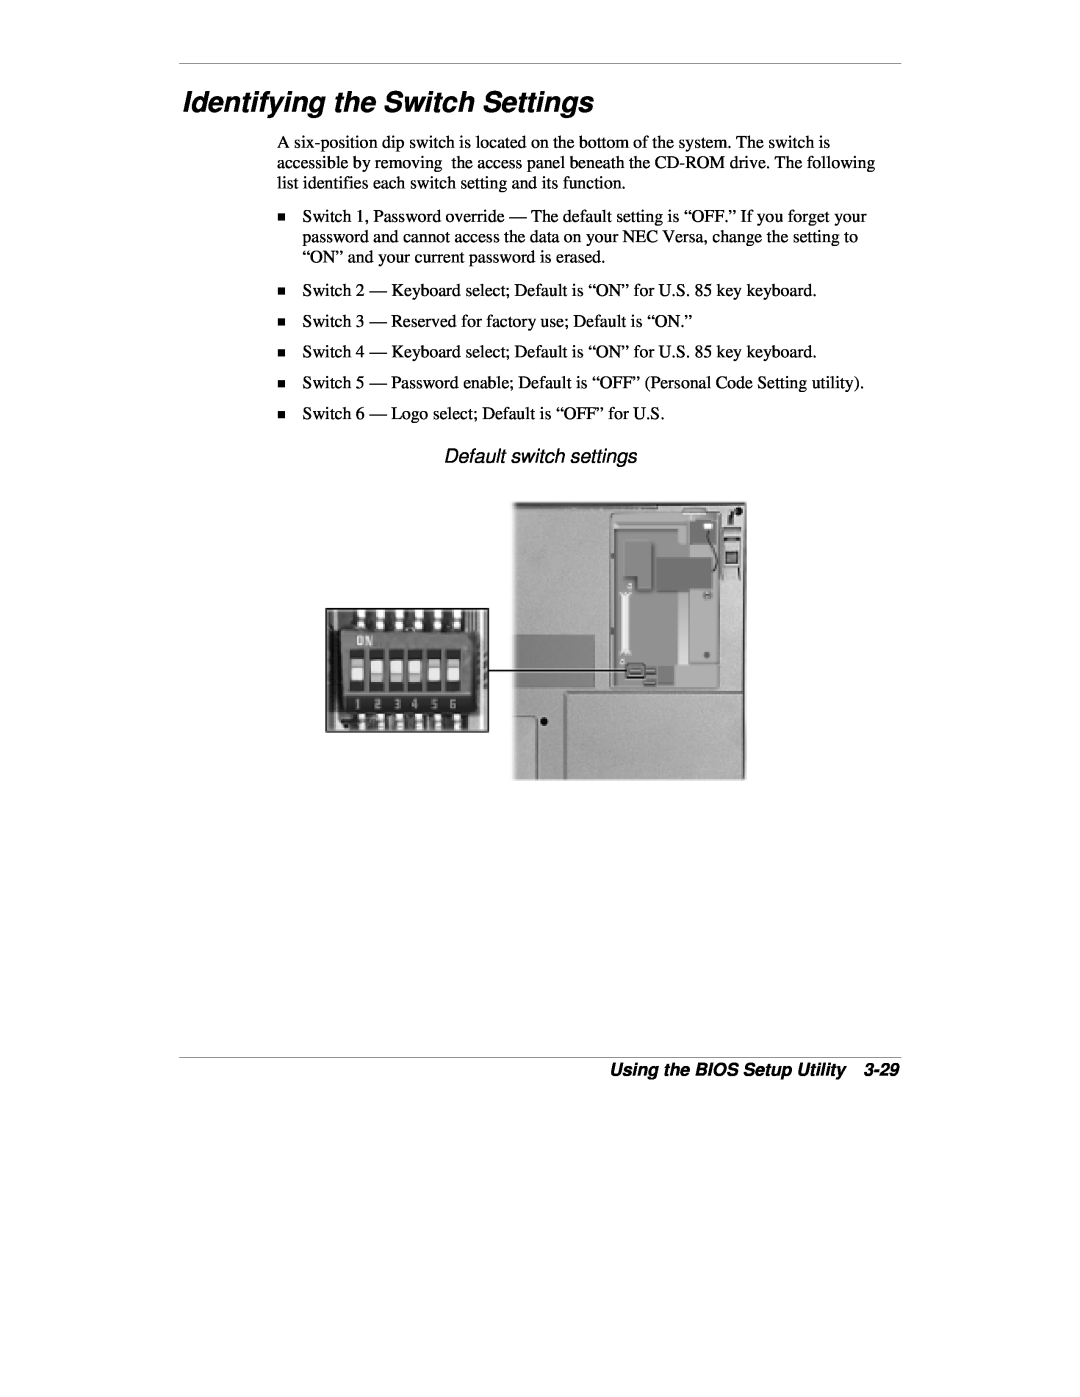 NEC VXi manual Identifying the Switch Settings, Default switch settings, Using the BIOS Setup Utility 